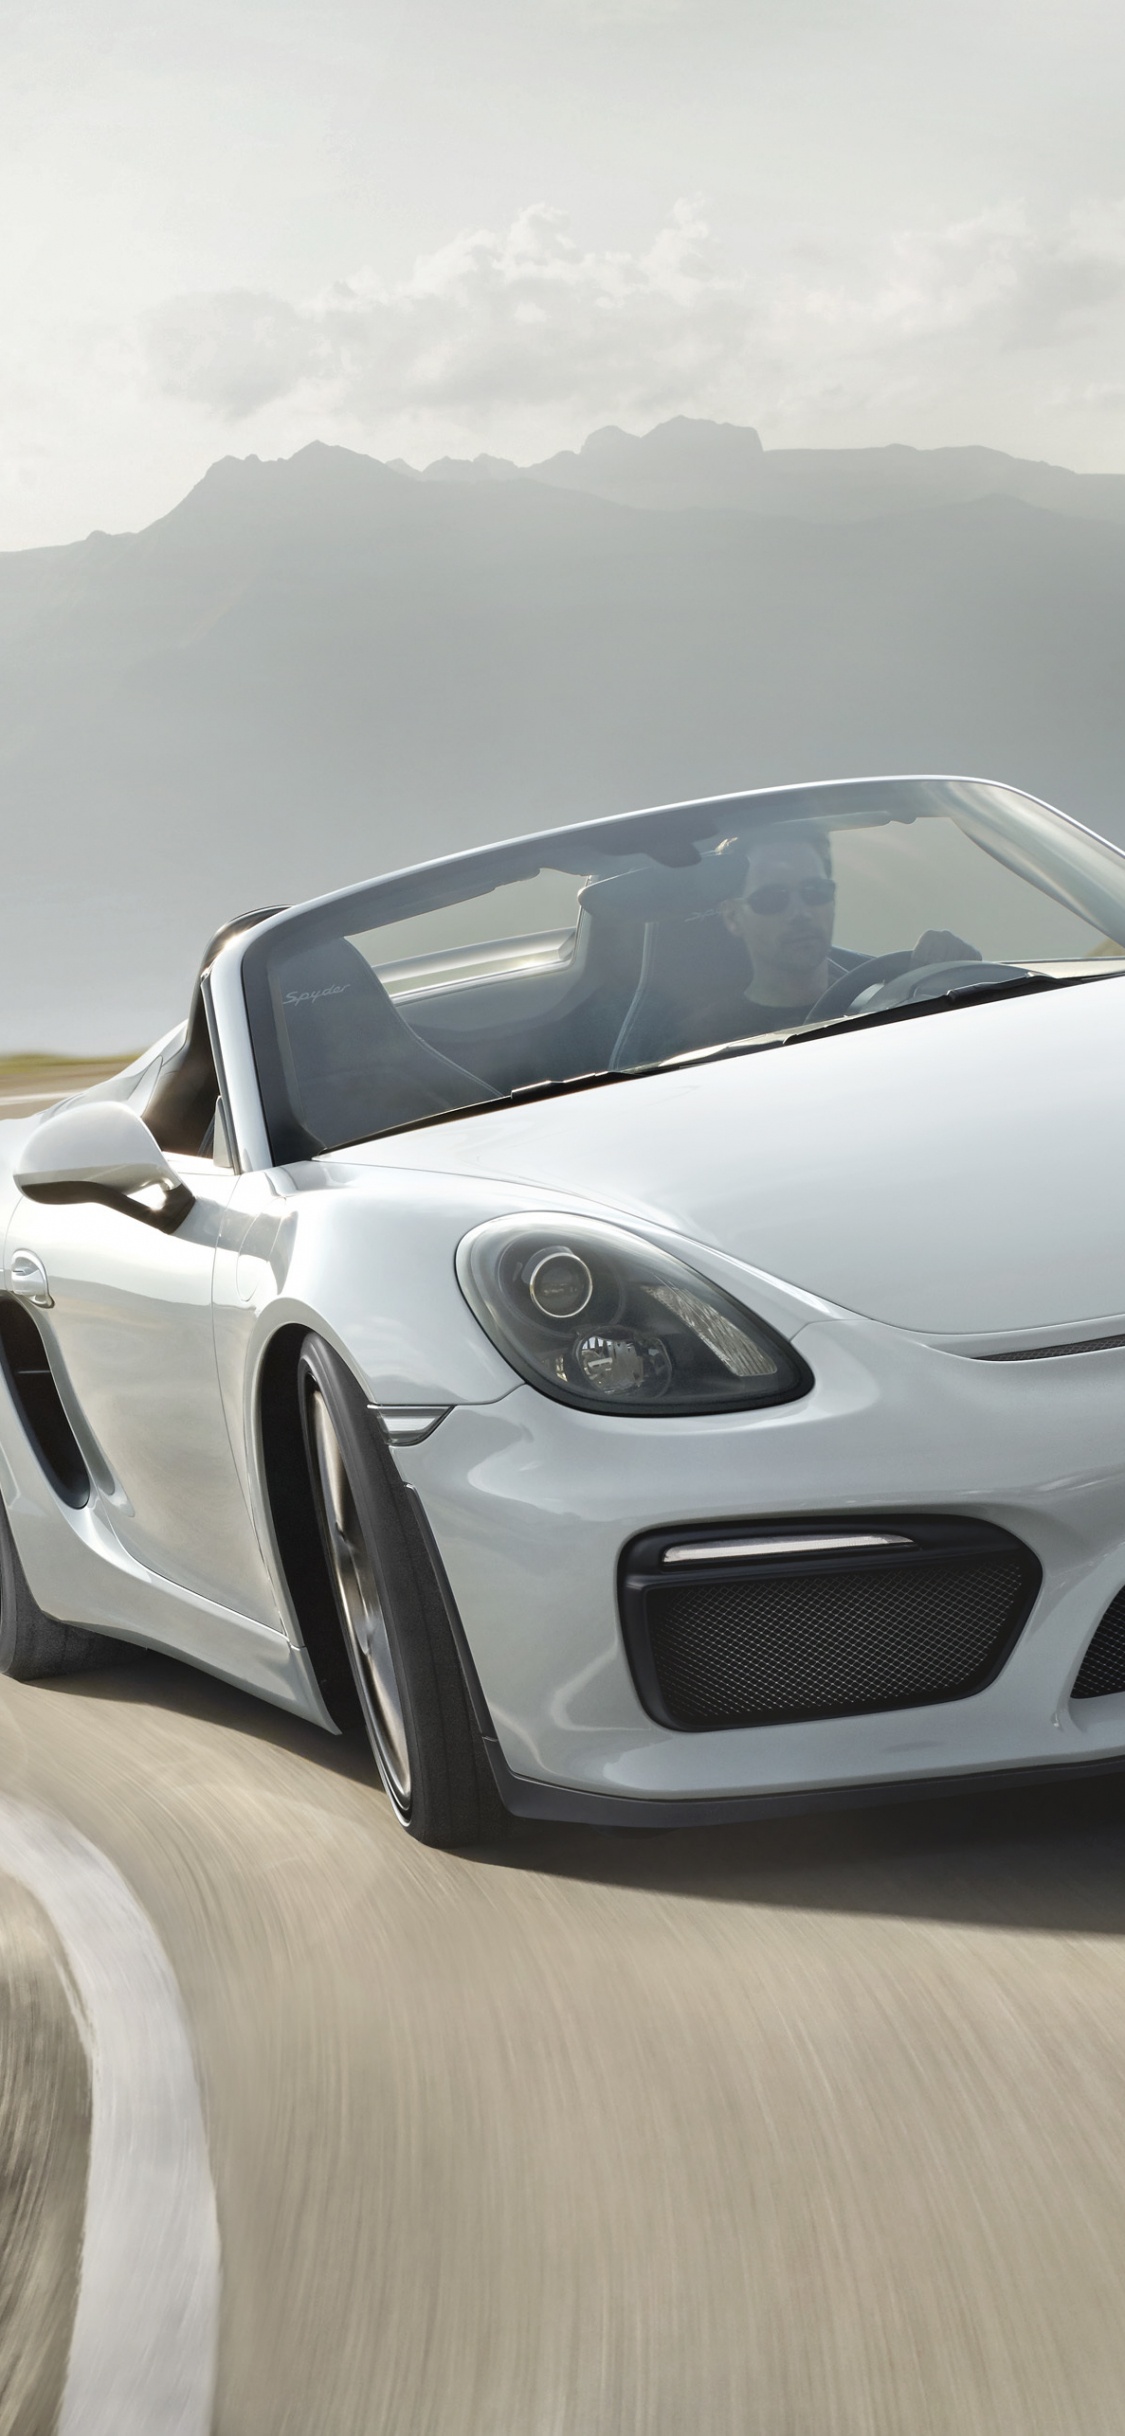 White Porsche 911 on Road During Daytime. Wallpaper in 1125x2436 Resolution